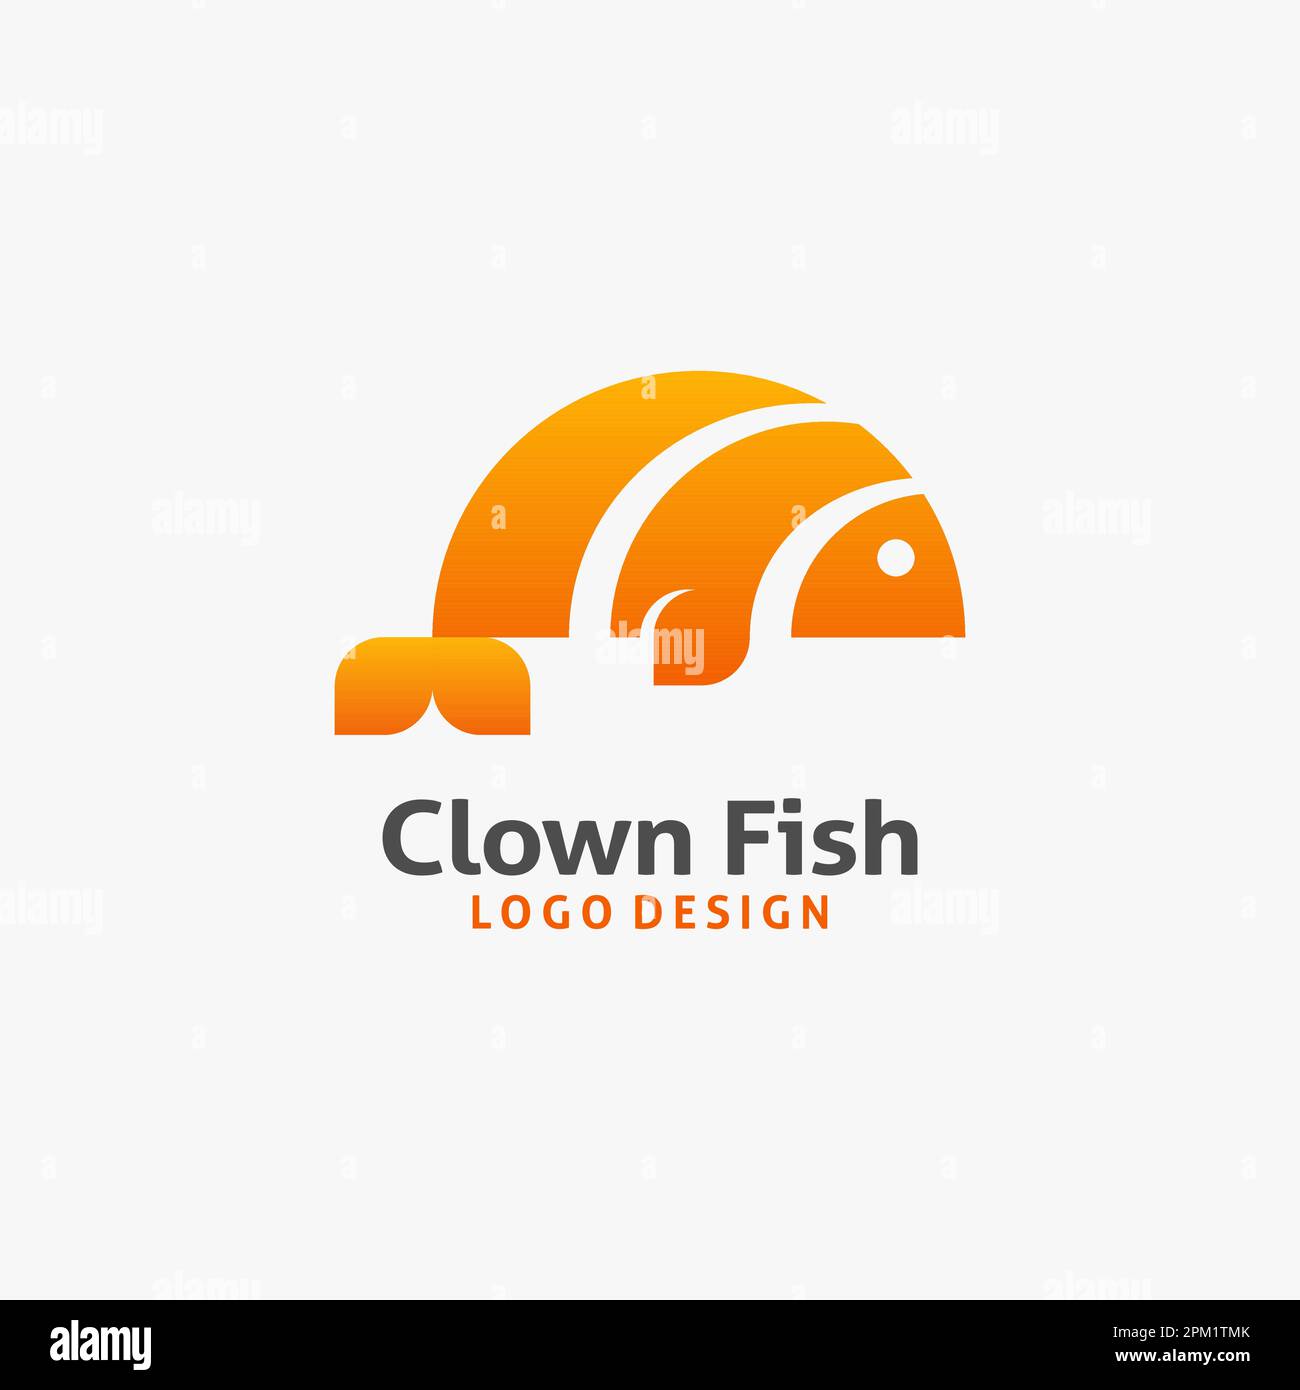 Clown fish logo design Stock Vector